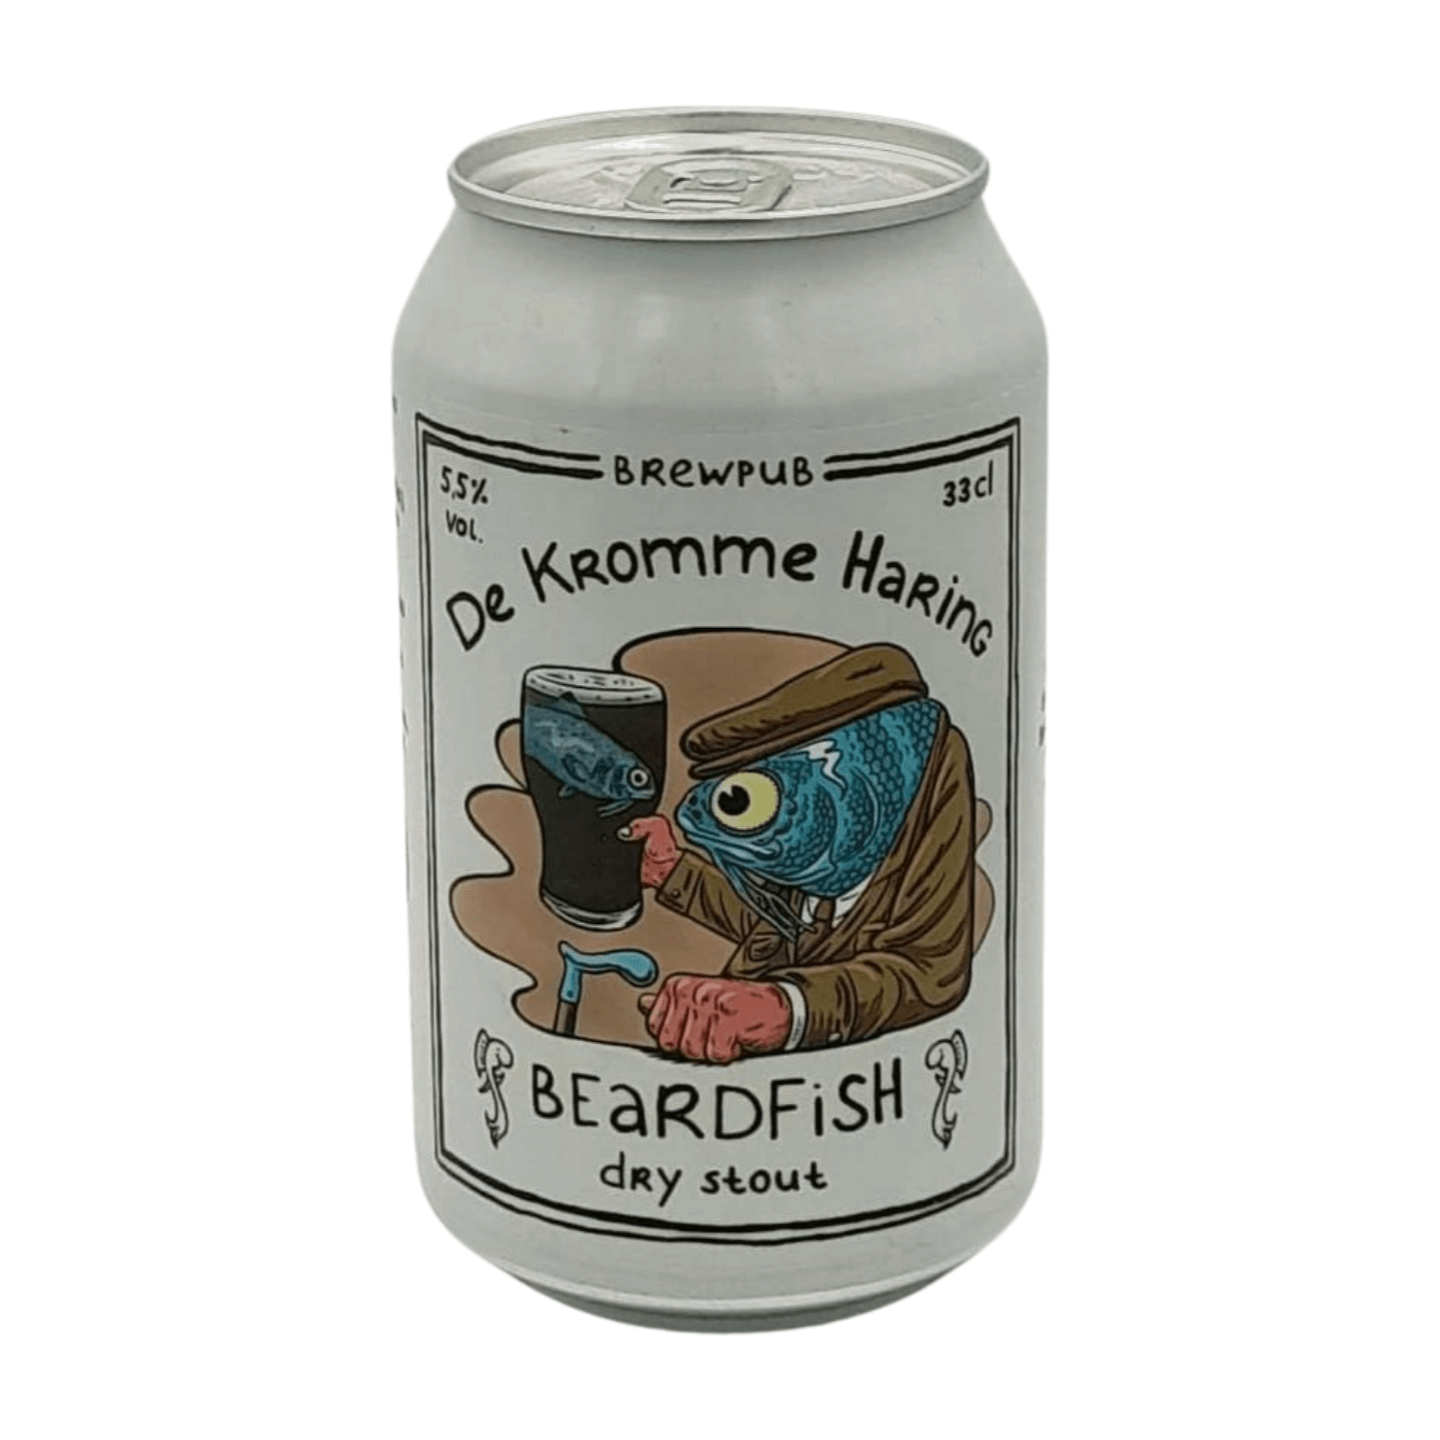 De Kromme Haring Beardfish | Dry Stout Webshop Online Verdins Bierwinkel Rotterdam